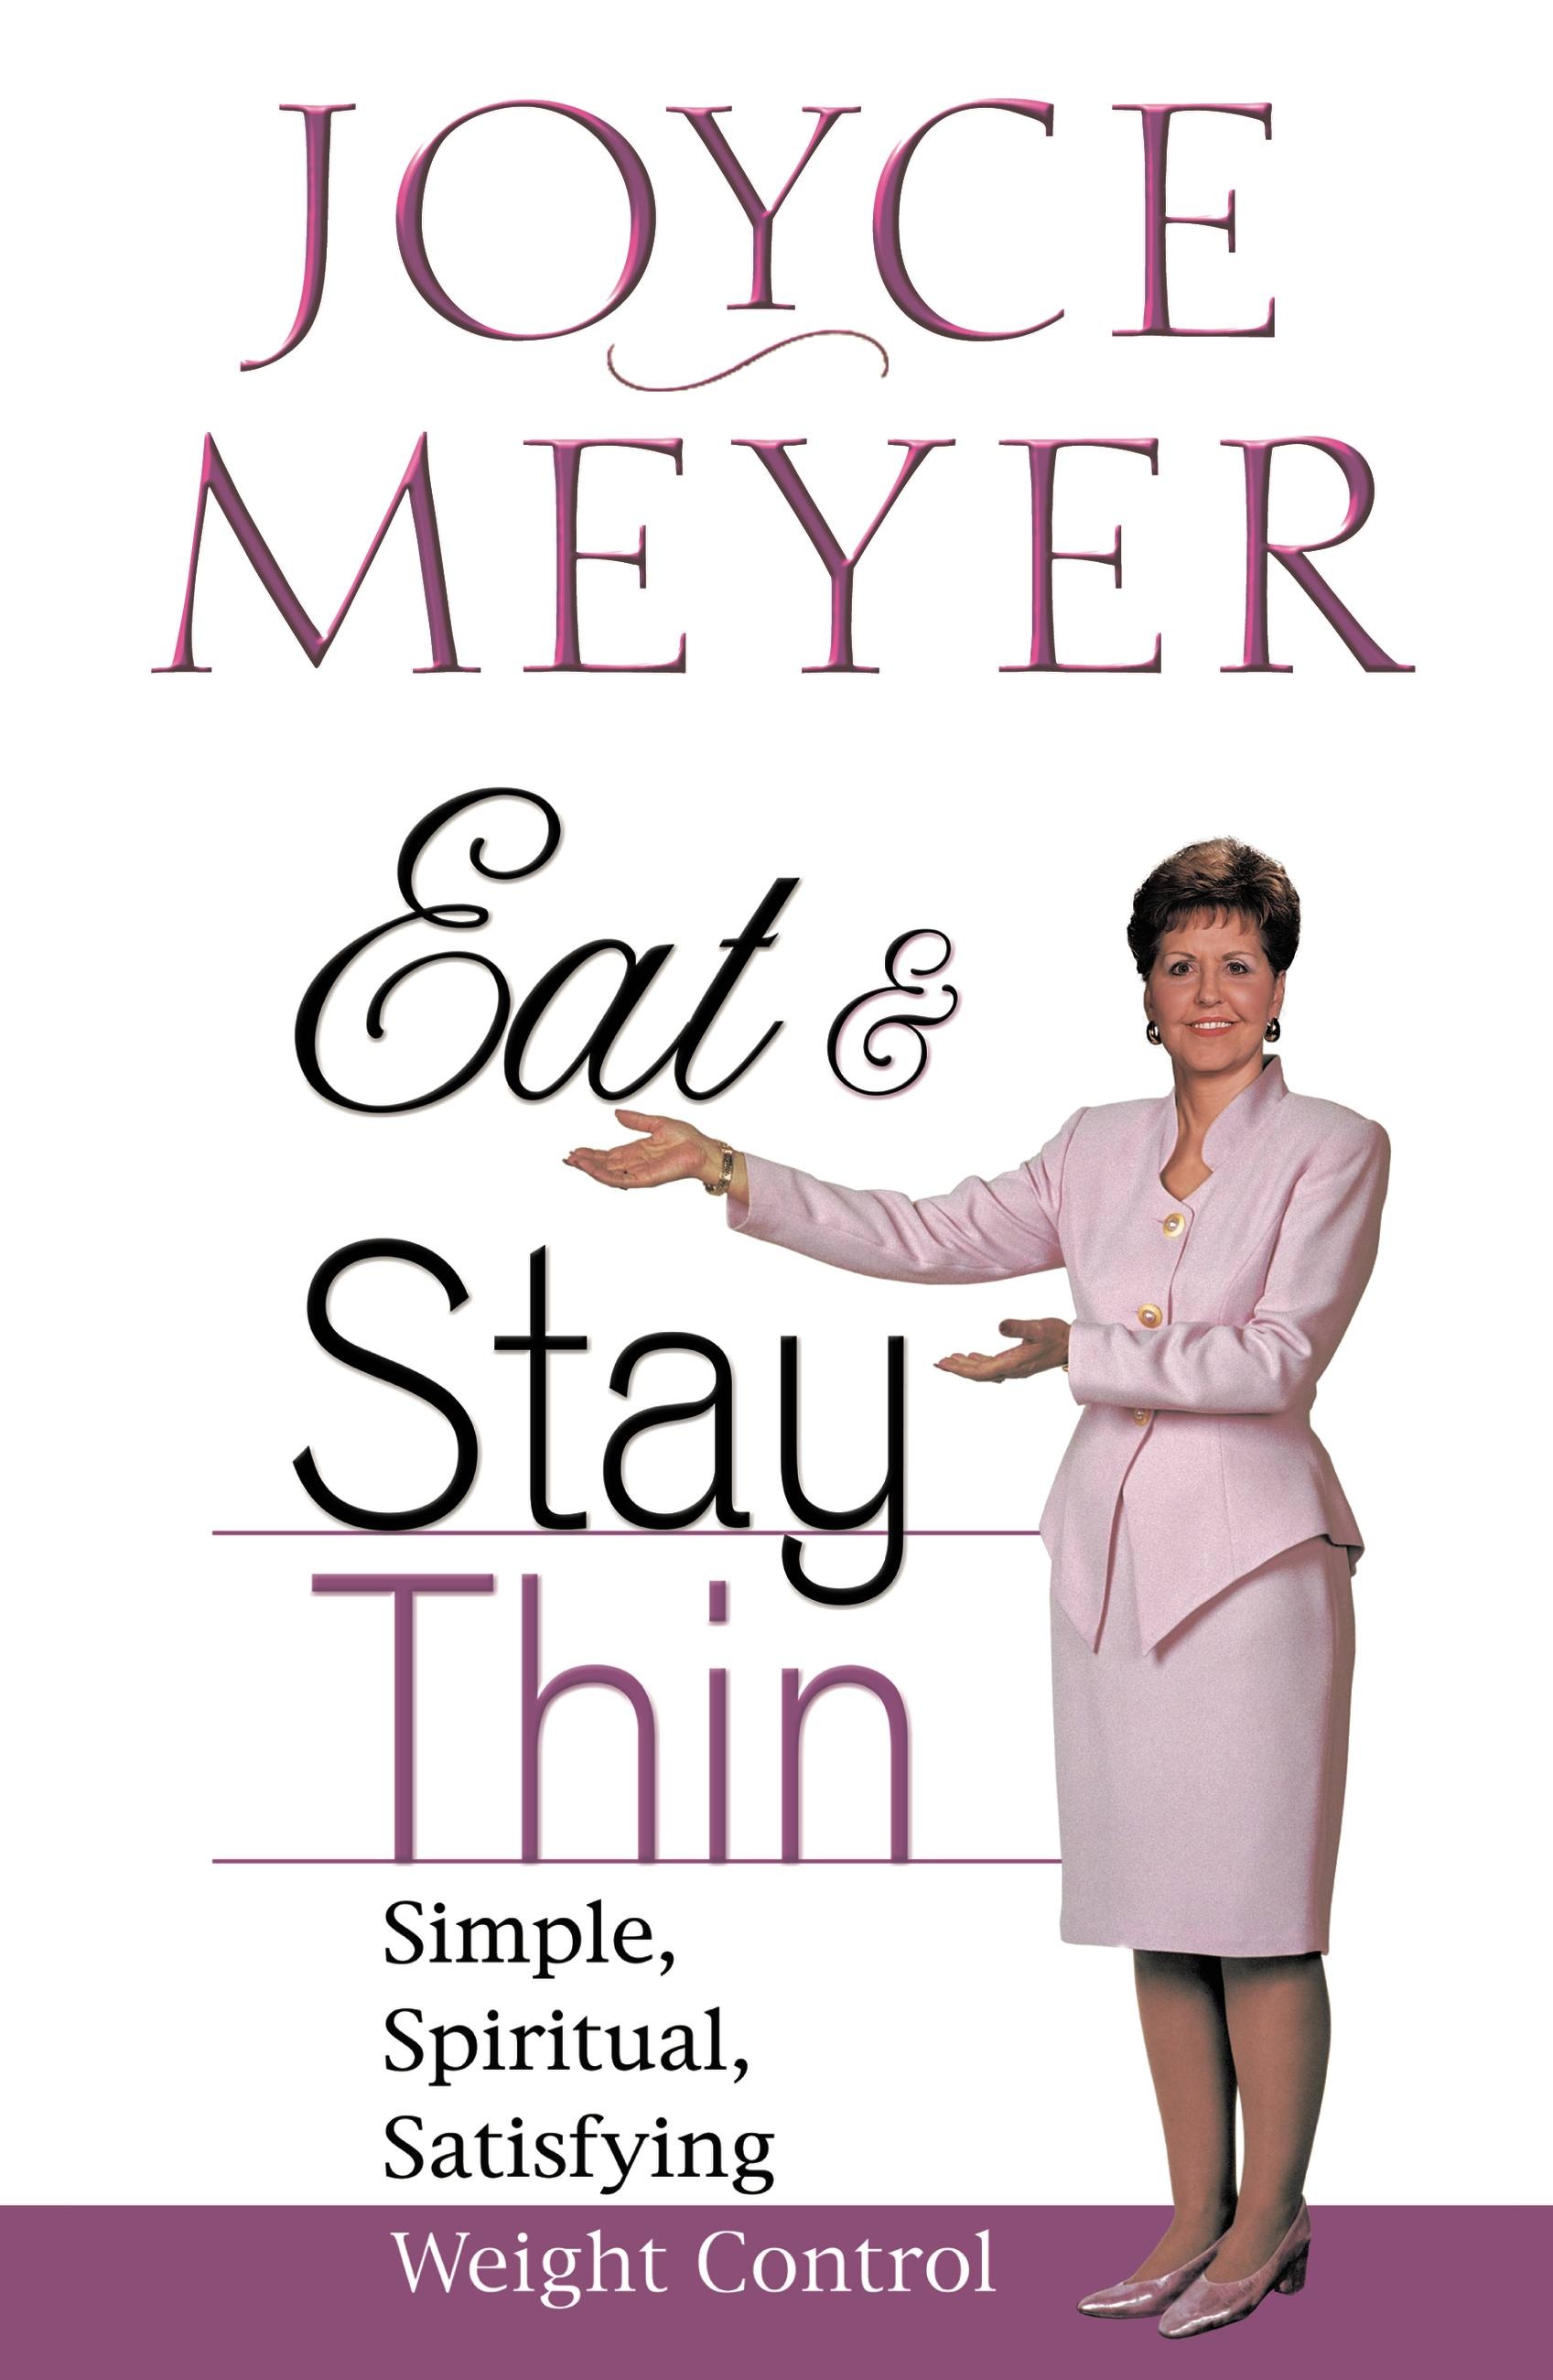 Effective October 1, 2002, Joyce Meyer's bestselling backlist is avail...